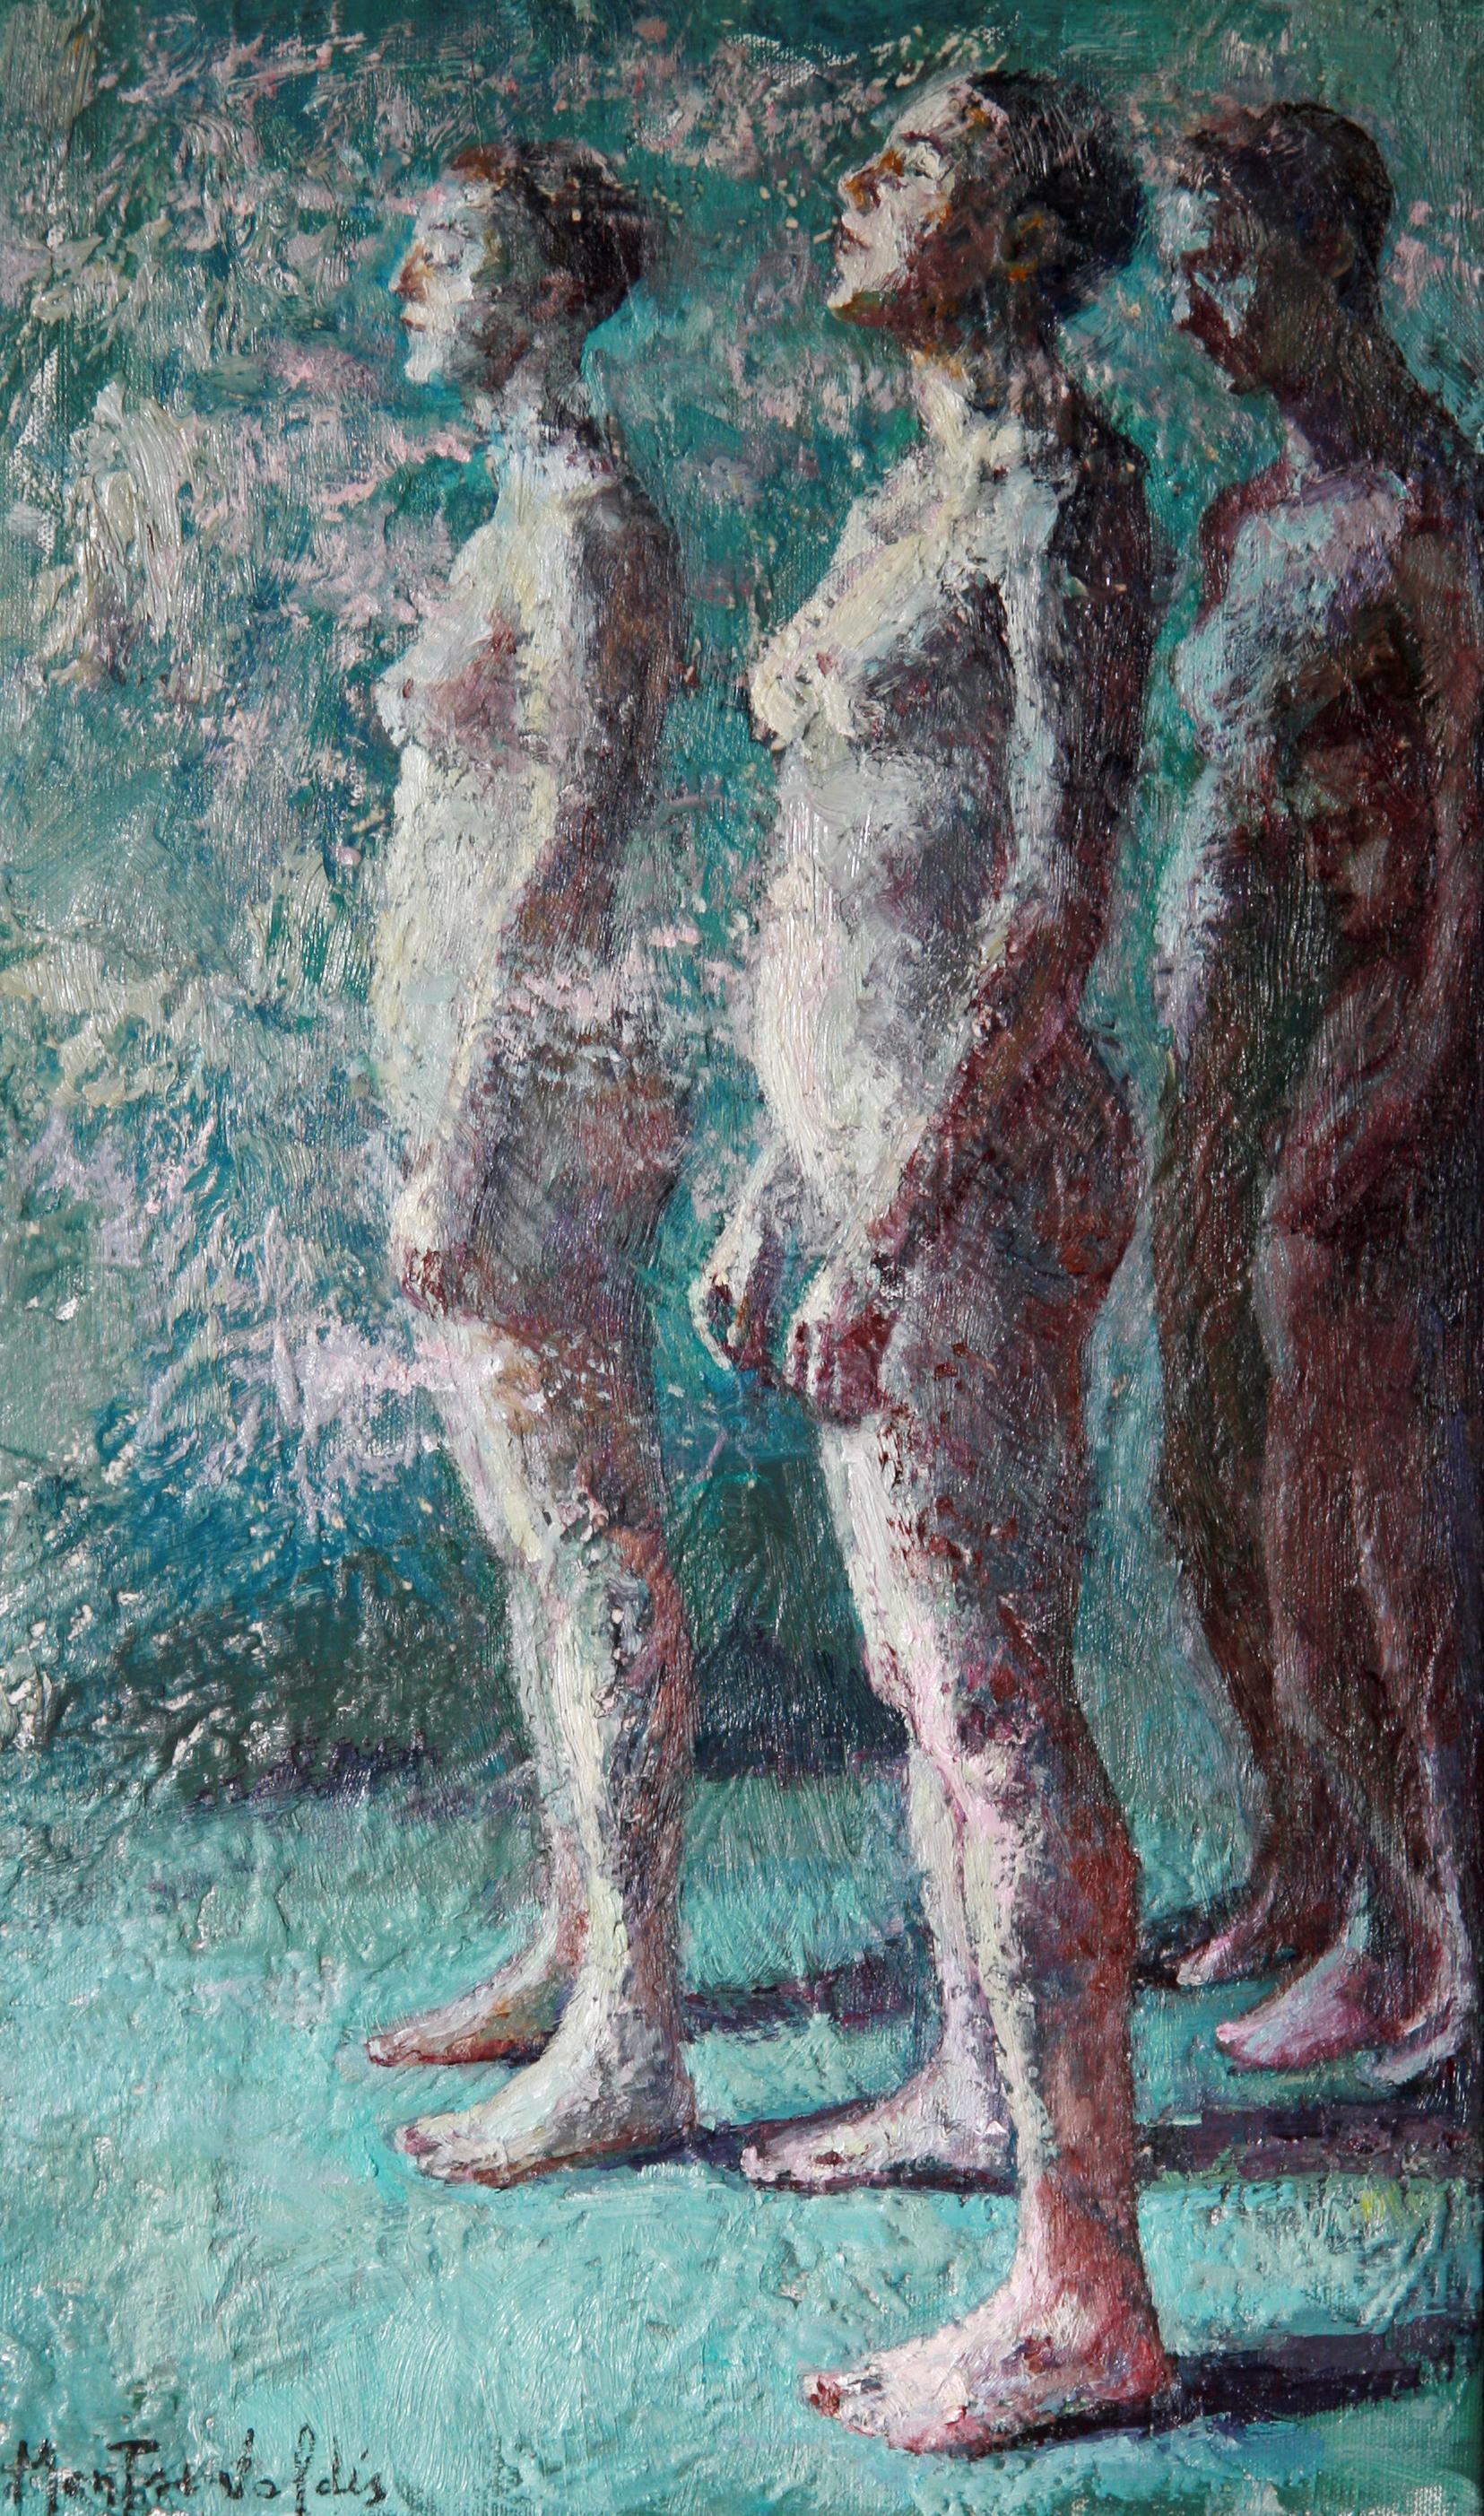 Montse Valdés Portrait Painting - 13-9-08 - 21st Century, Contemporary, Nude Painting, Oil on Canvas